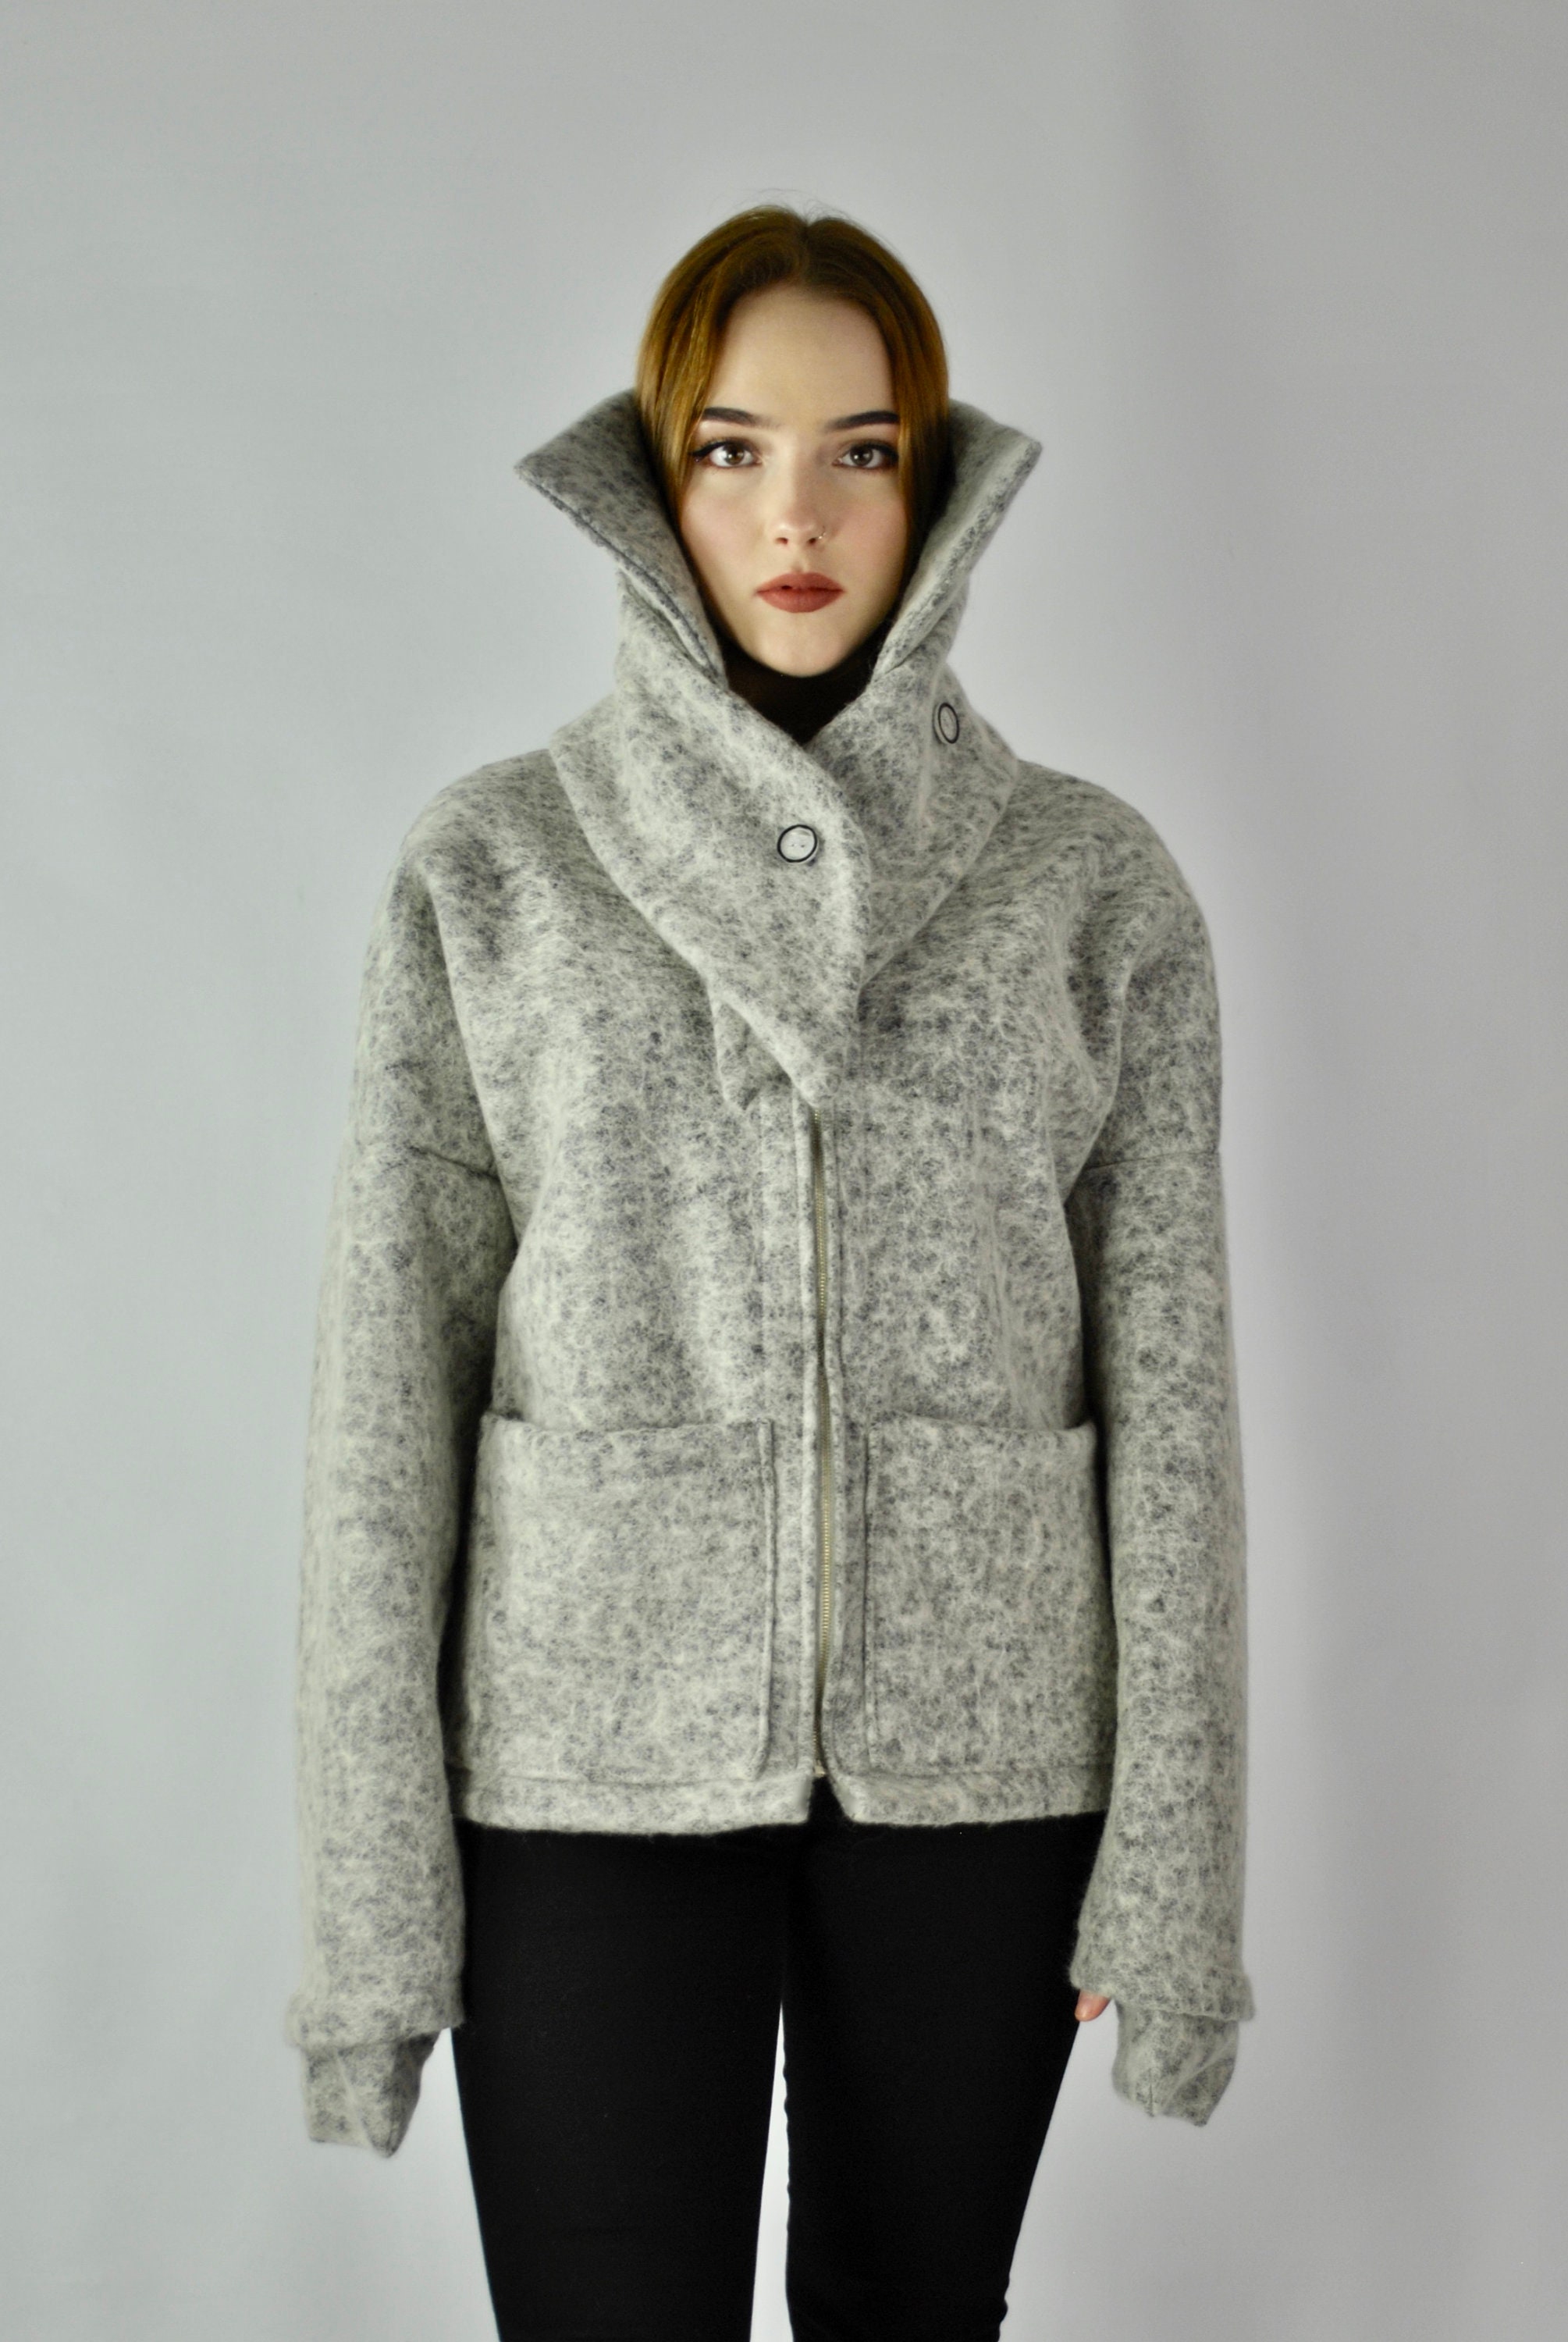 Wool winter jacket jumper sweater loose fitting boiled wool | Etsy